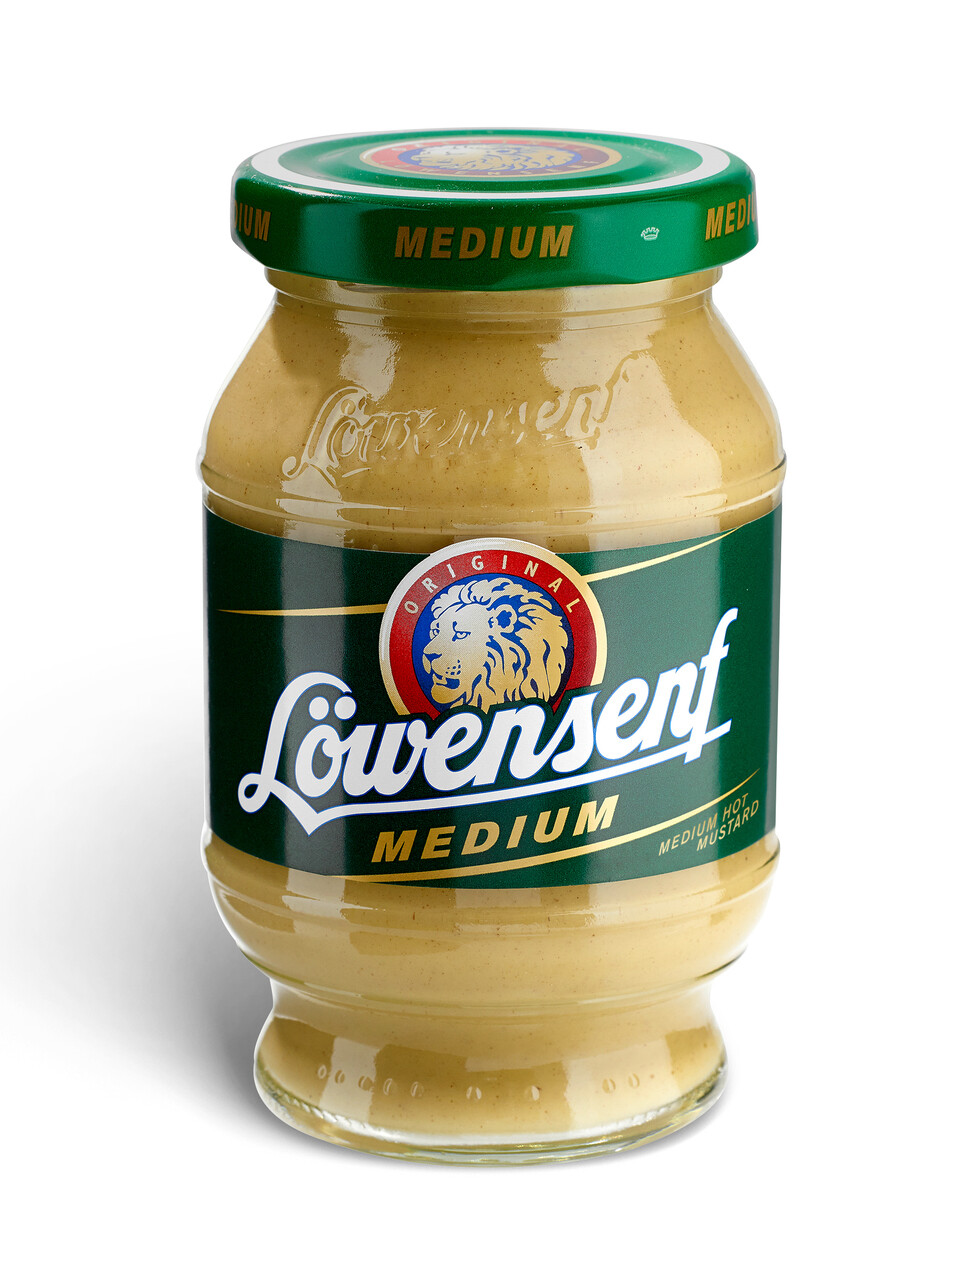 Lowensenf Medium Hot Mustard